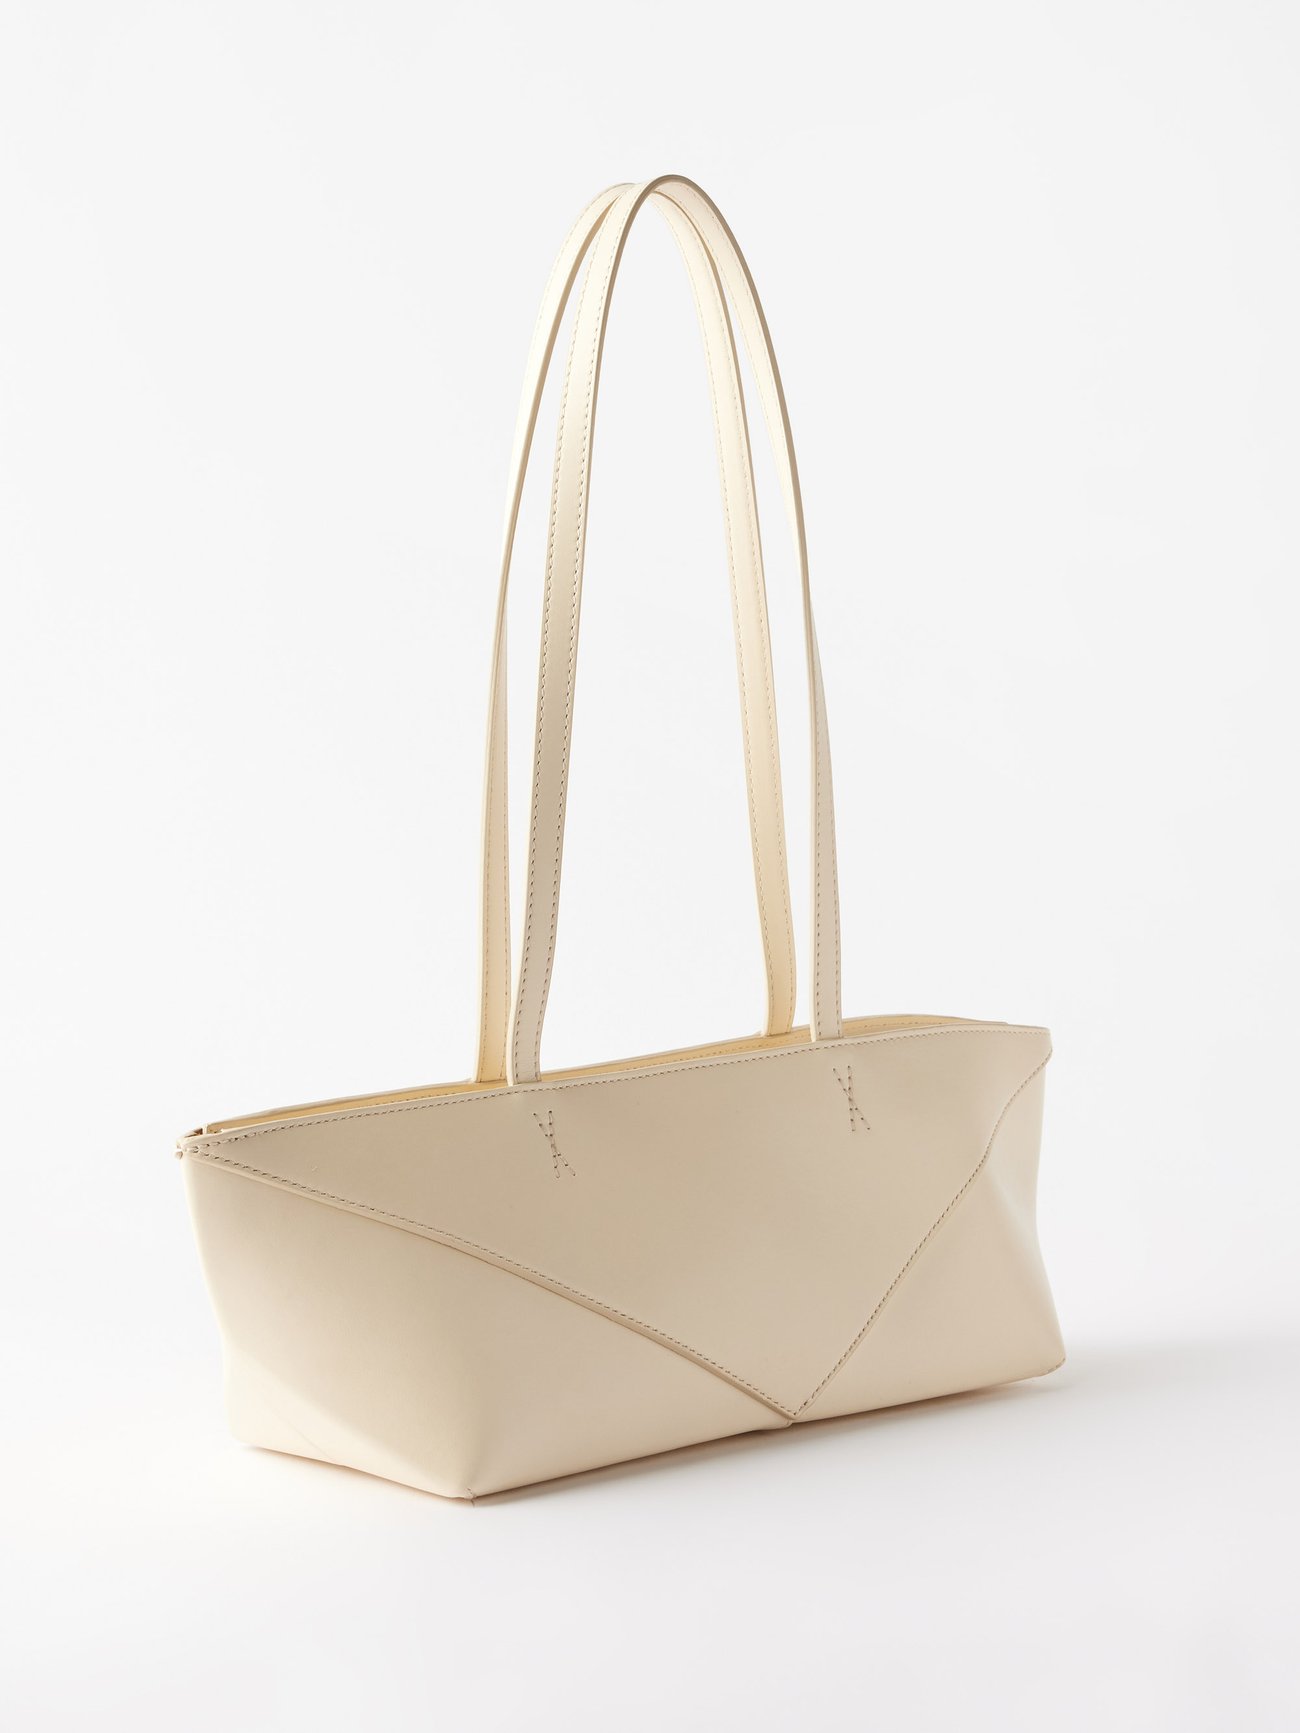 Loewe White Canvas Bucket Bag